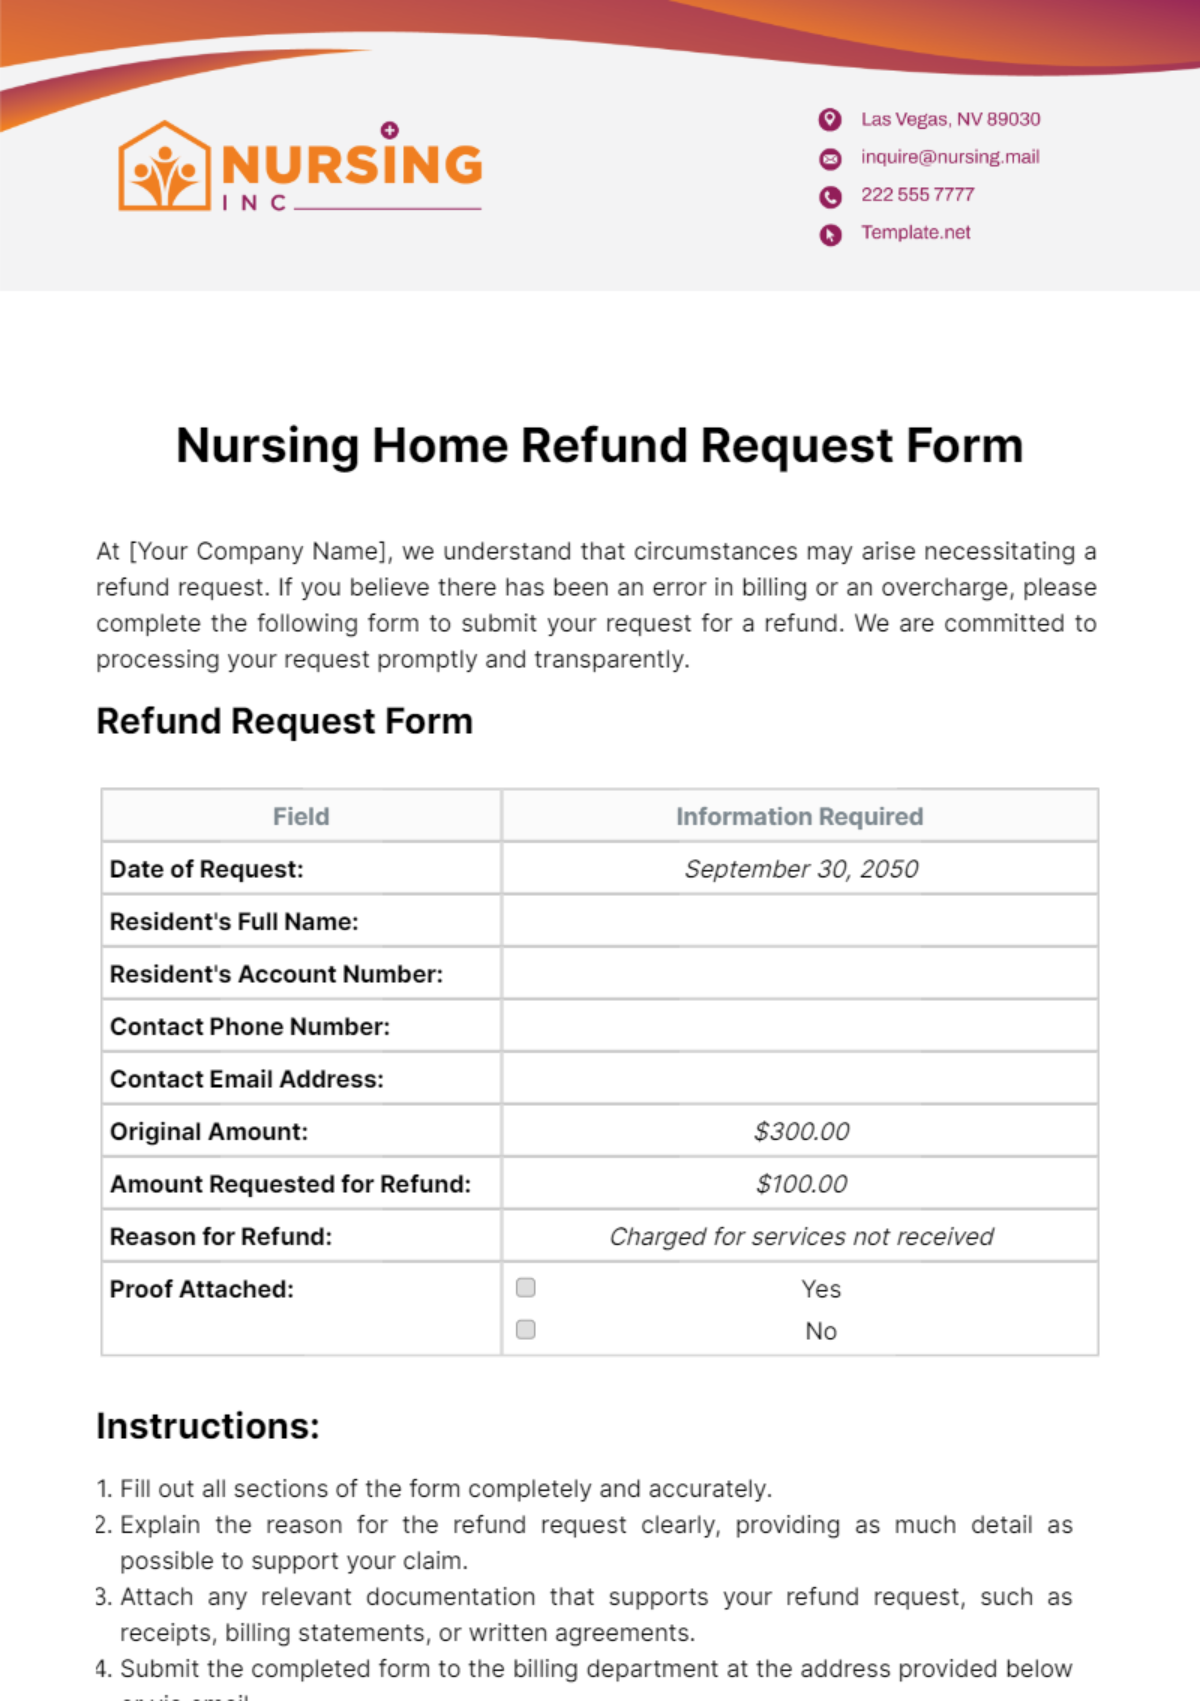 Nursing Home Refund Request Form Template